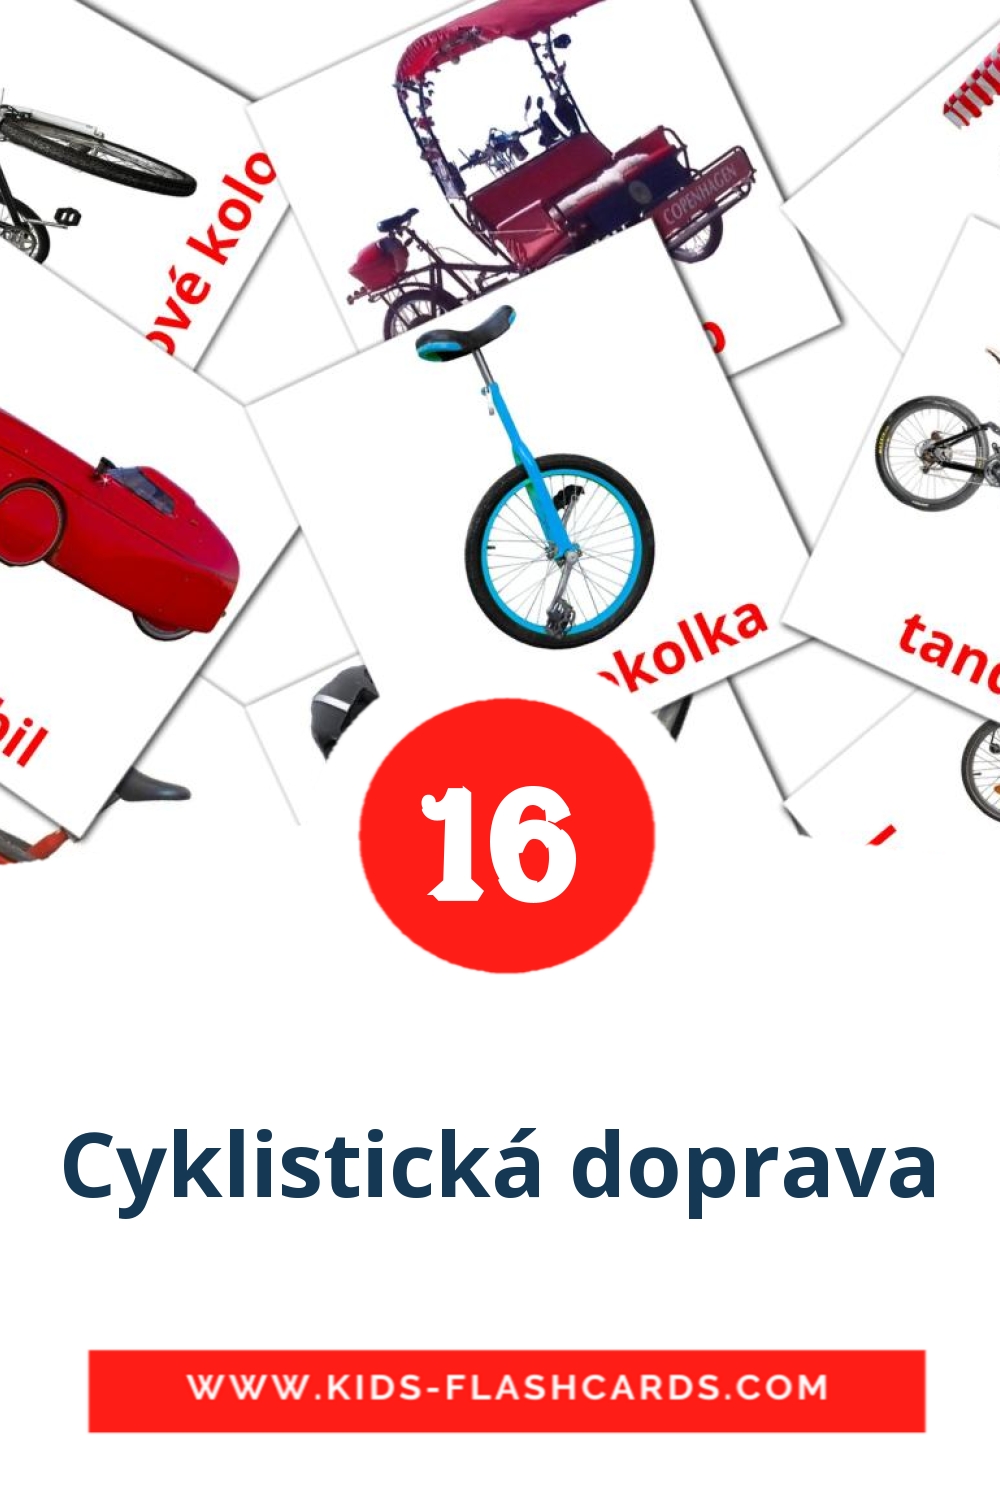 16 Cyklistická doprava Picture Cards for Kindergarden in czech